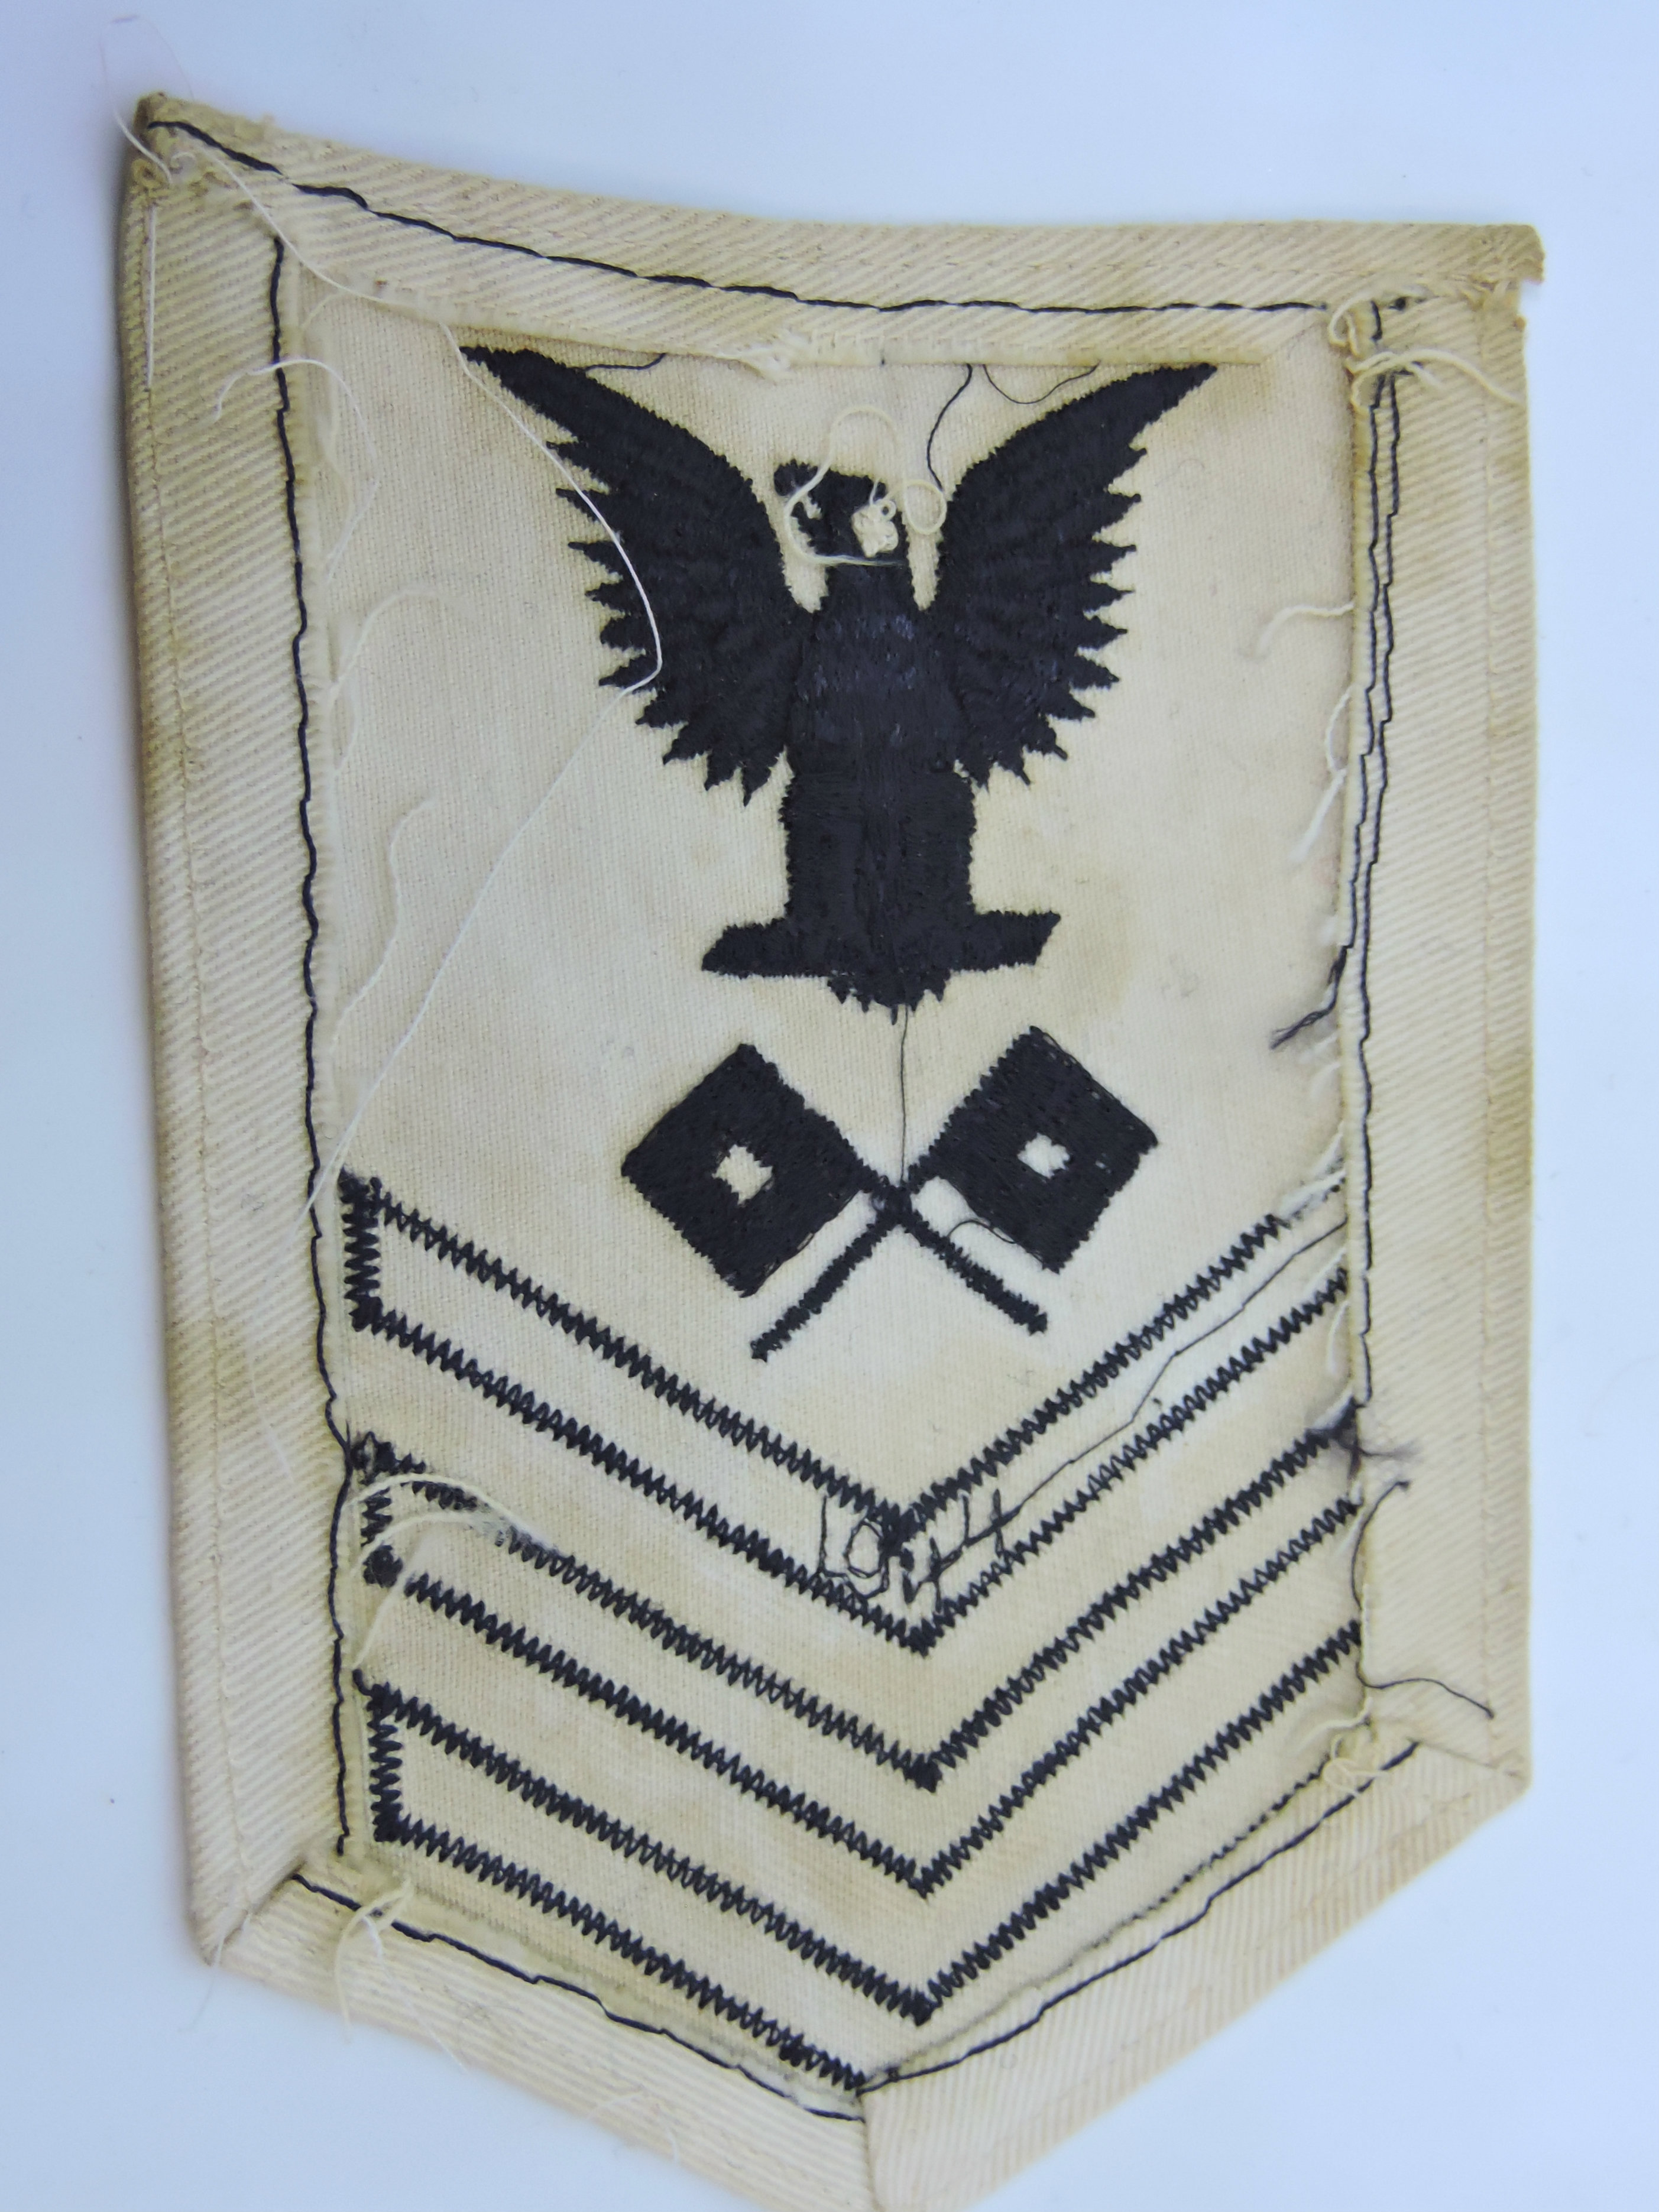 Sleeve rate Petty Officer 1st class  Signalman  1944